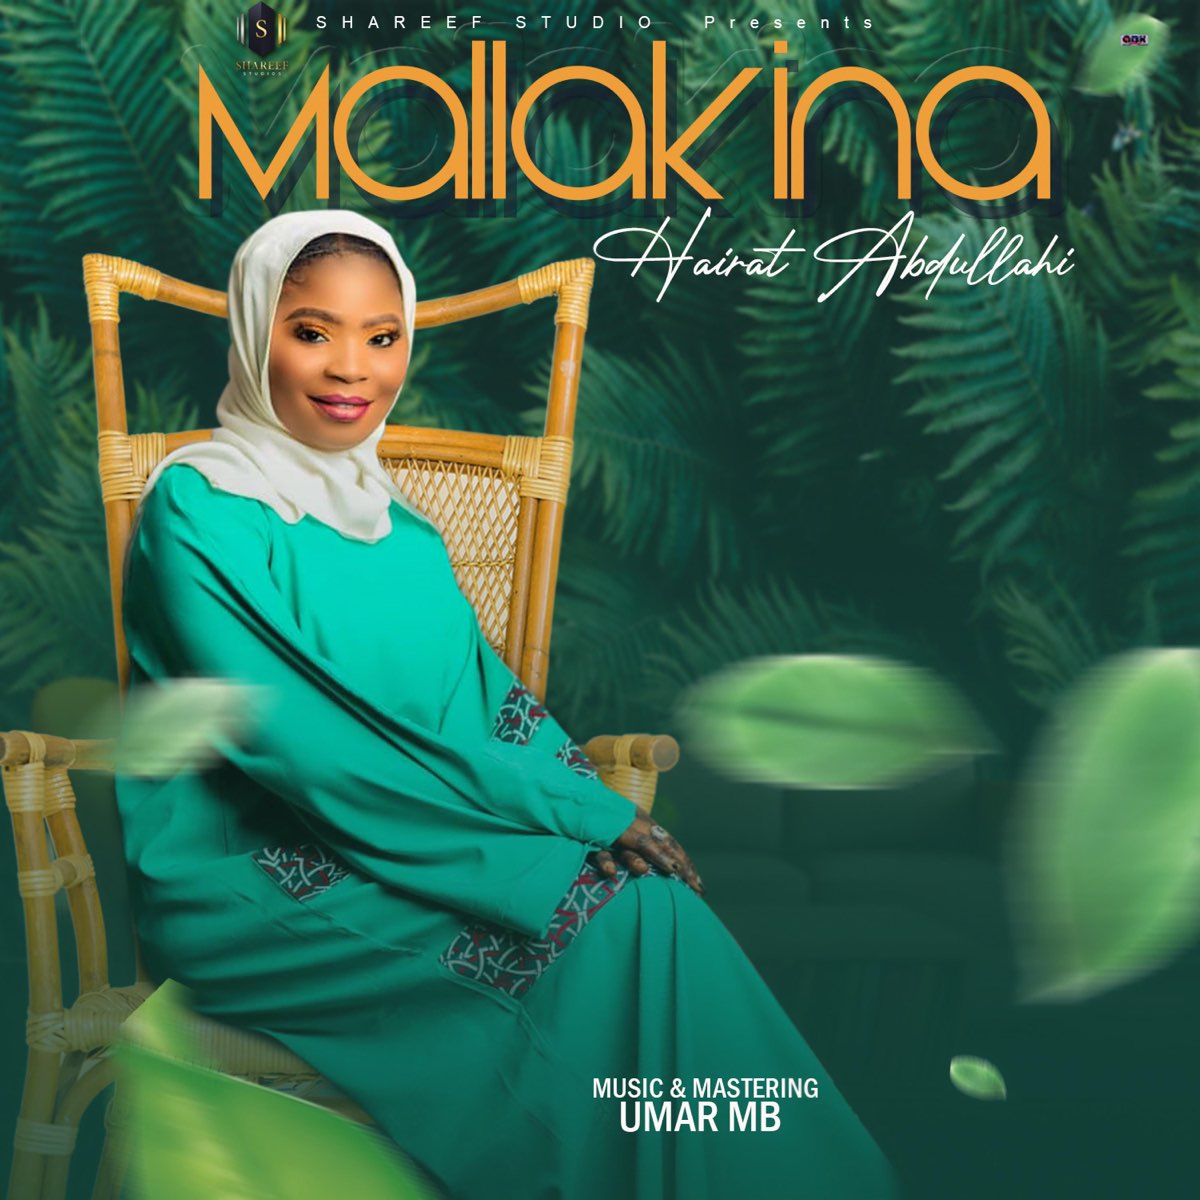 Hairat Abdullahi - Mallakina Official Download Audio